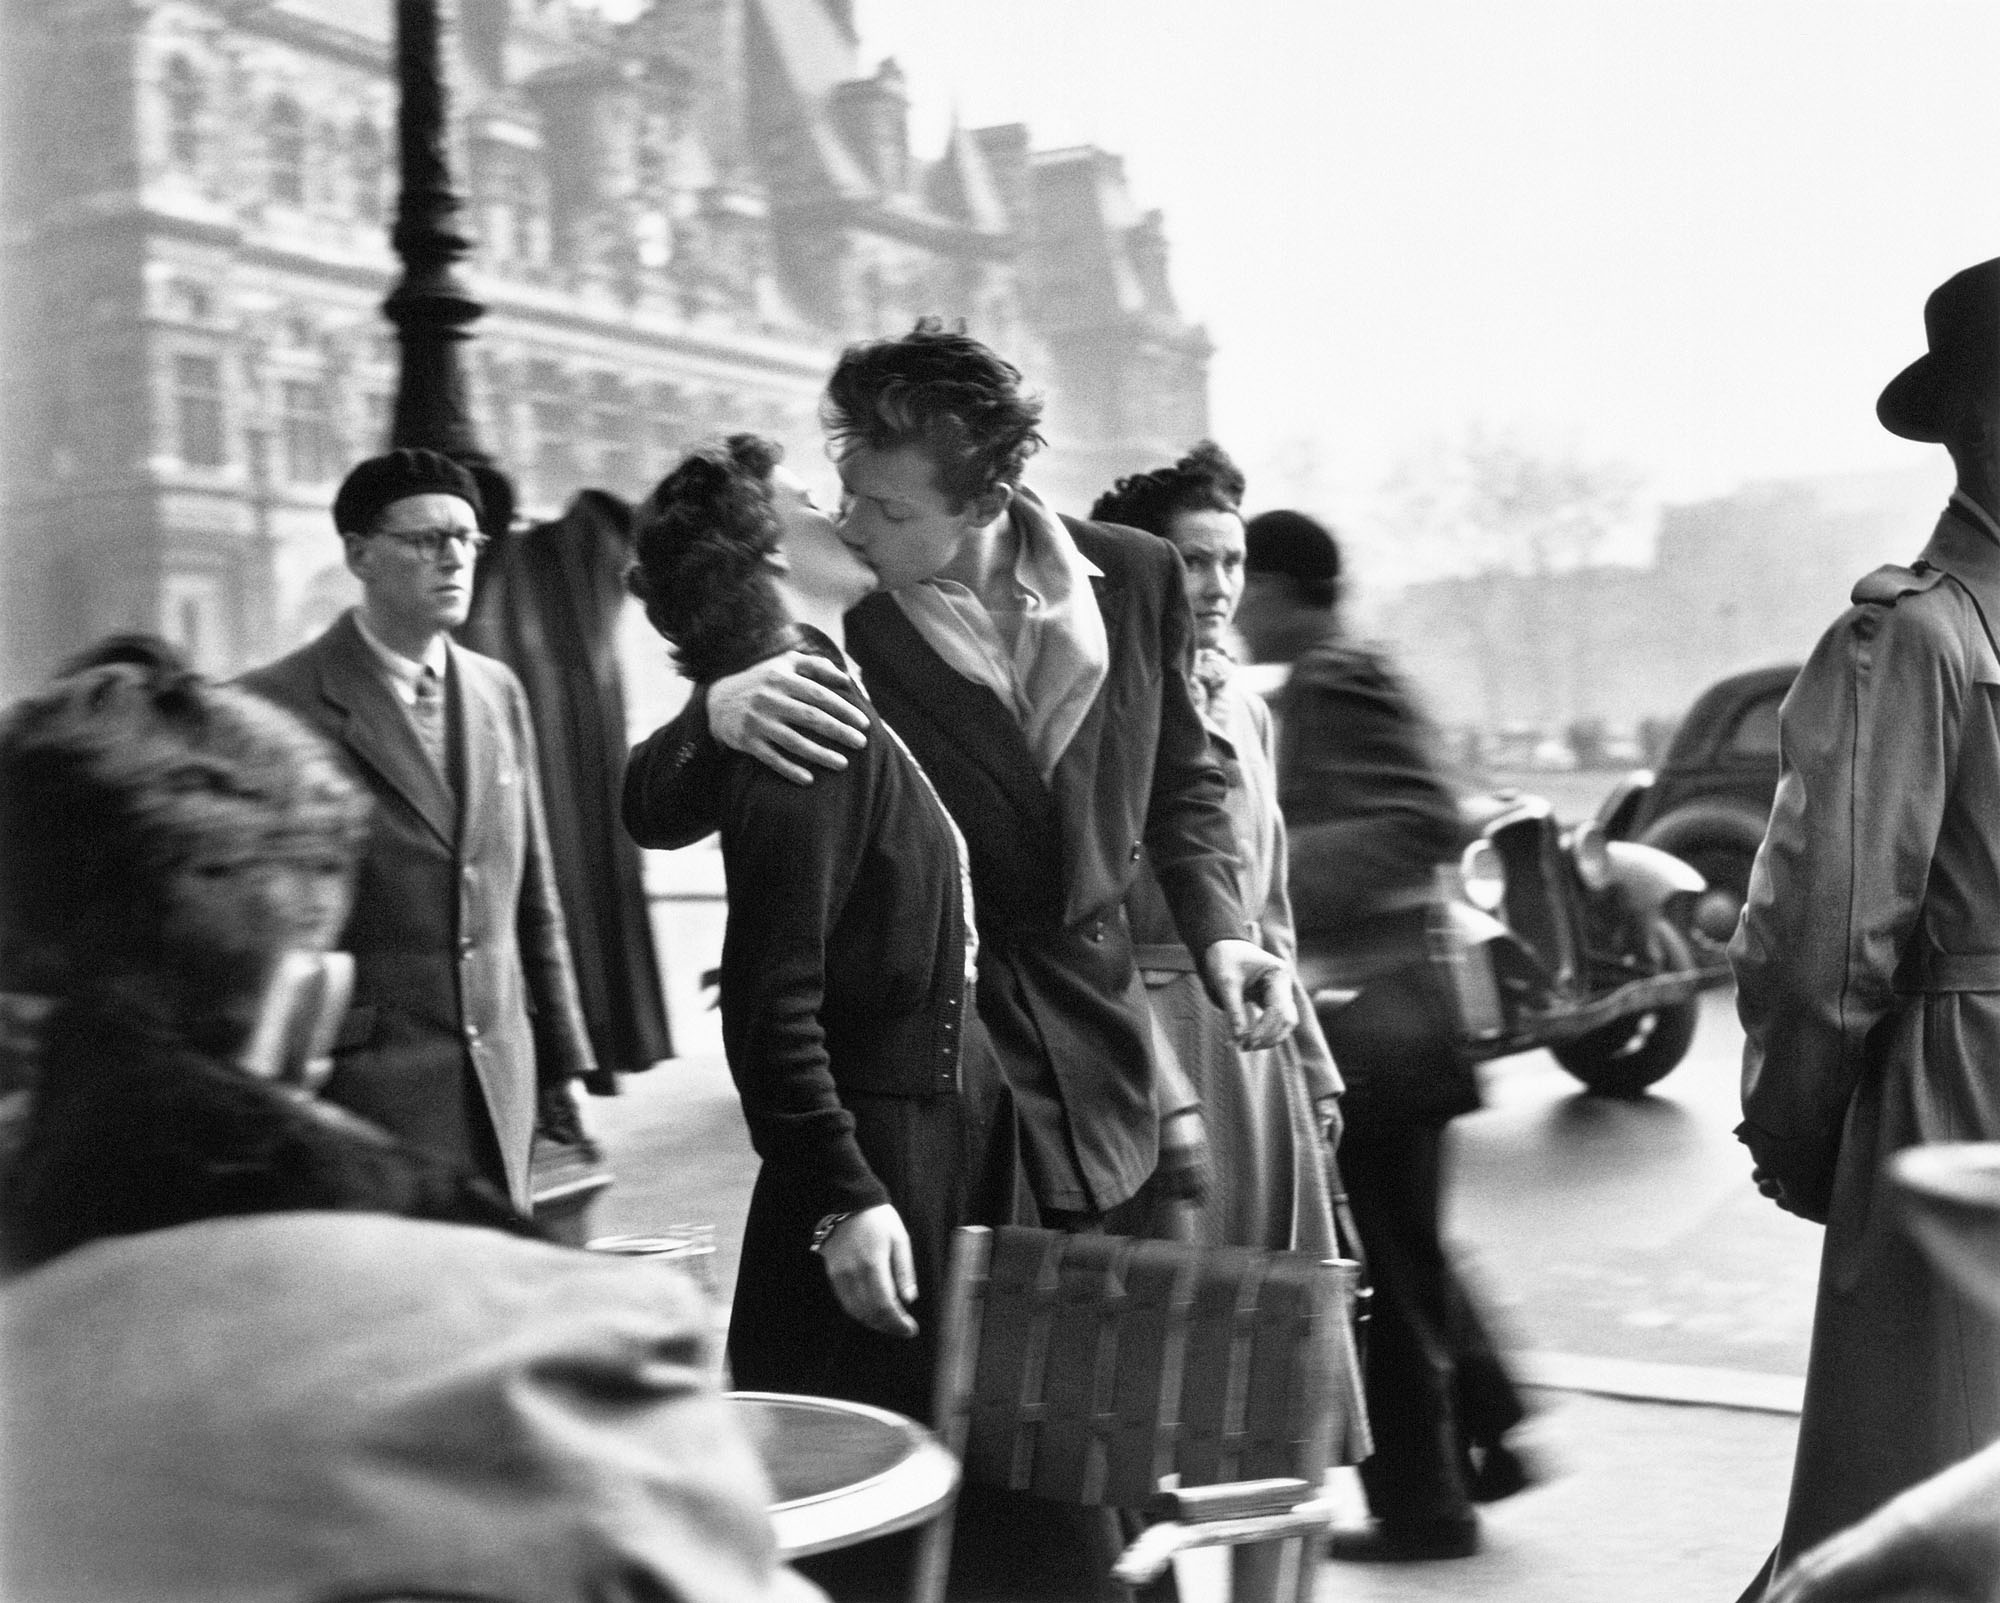 Robert Doisneau, Le baiser de L’Hotel De Ville, 1950 © Atelier Robert Doisneau